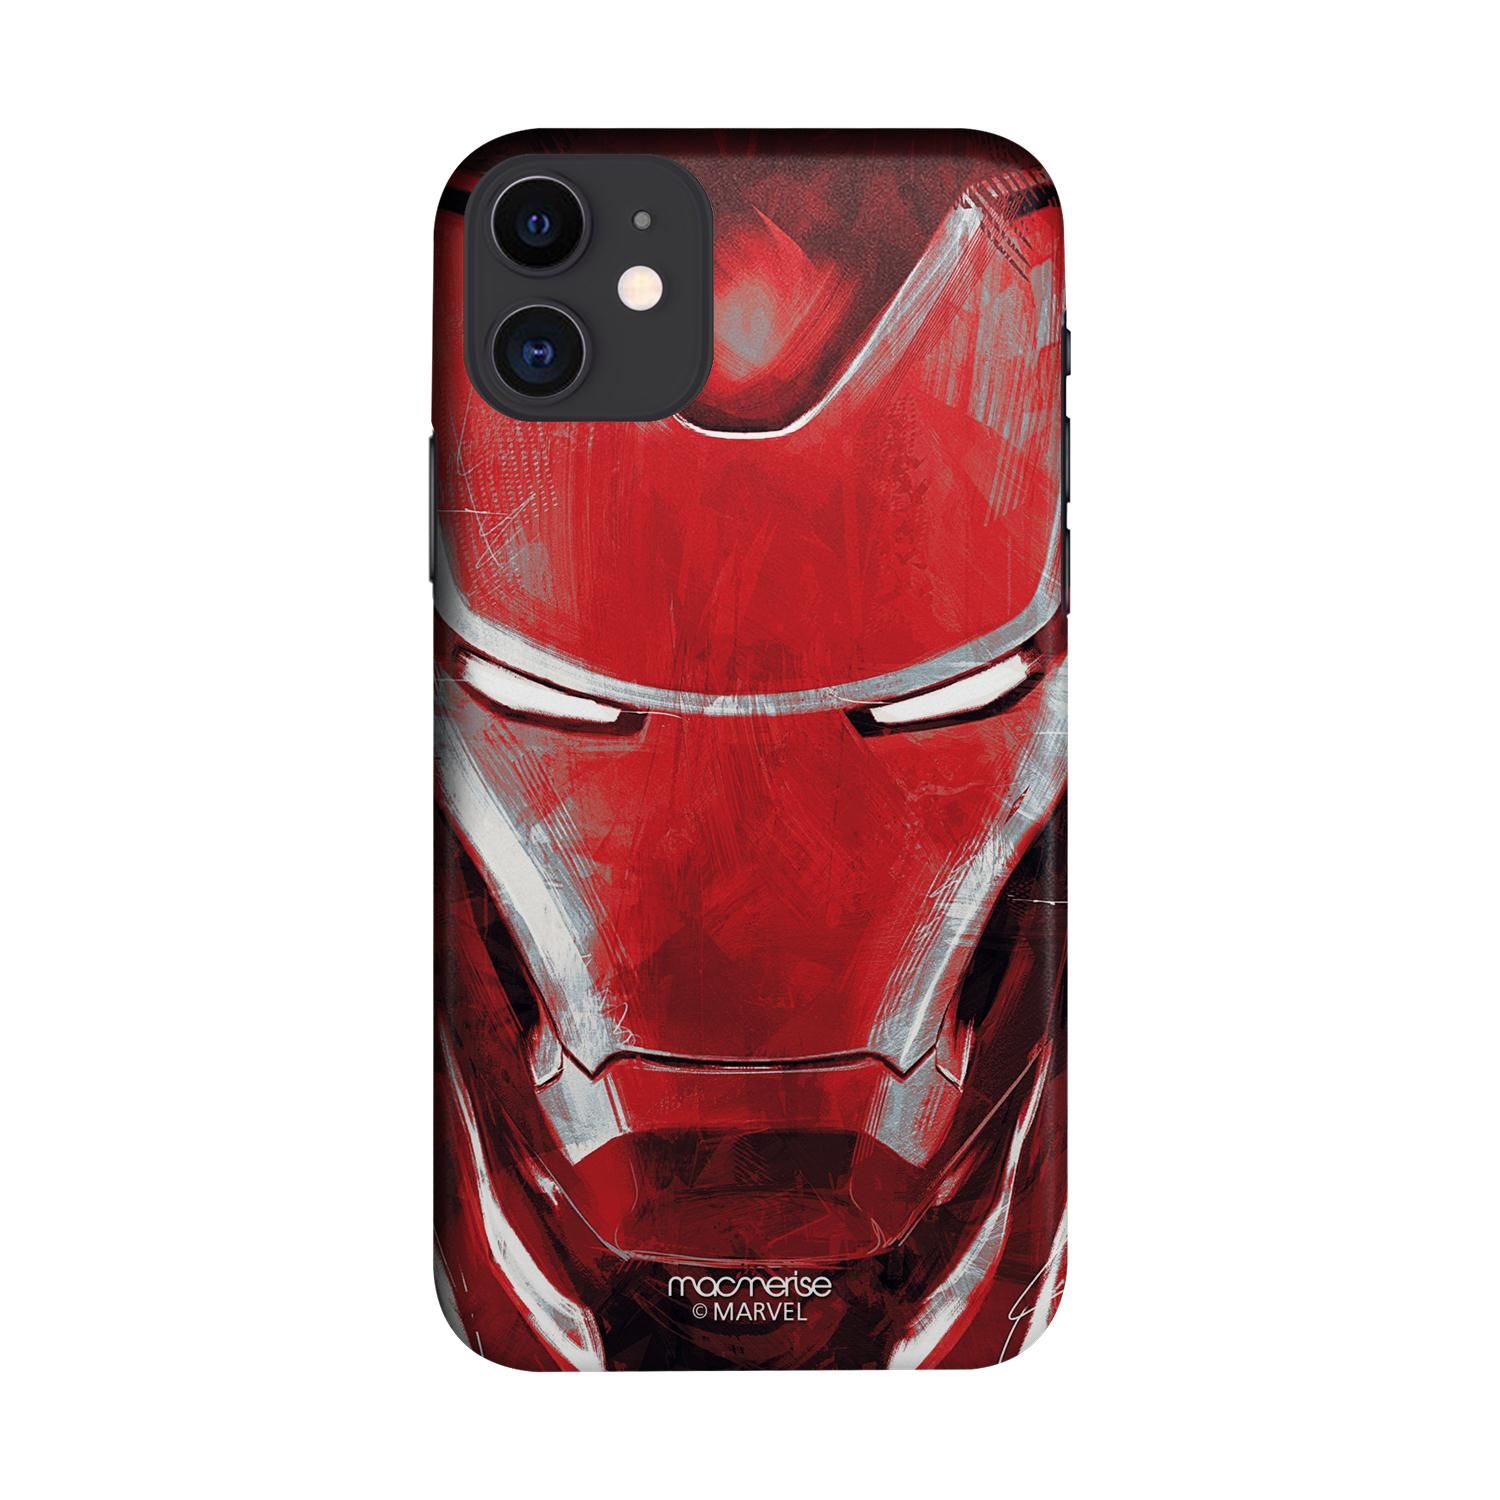 Buy Charcoal Art Iron man - Sleek Phone Case for iPhone 11 Online